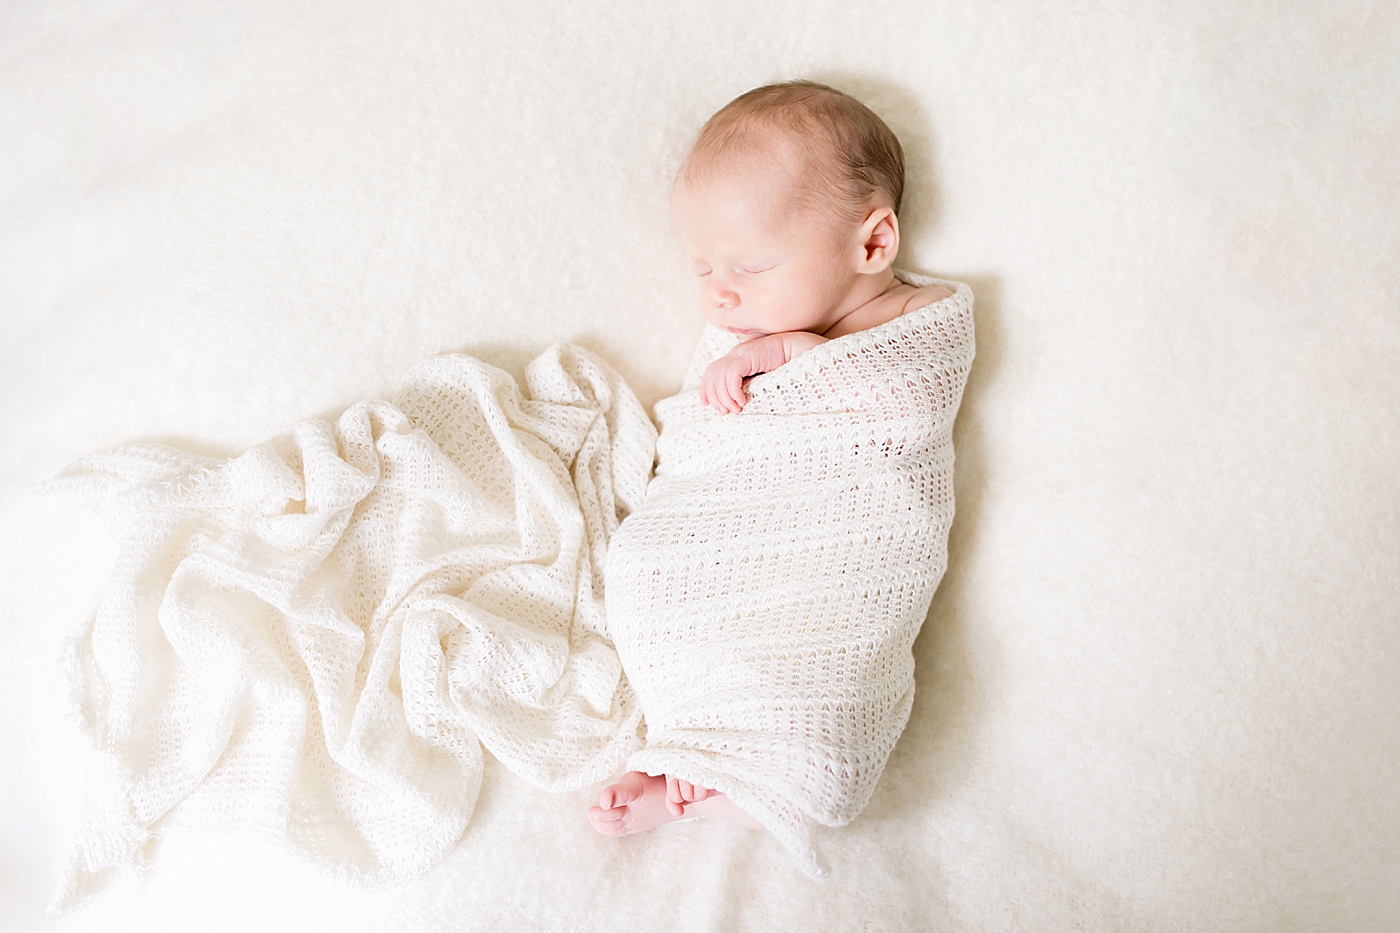 Newborn sleeping on cream surface with swaddle | Photo by Charlotte NC Newborn Photographer Anna Wisjo